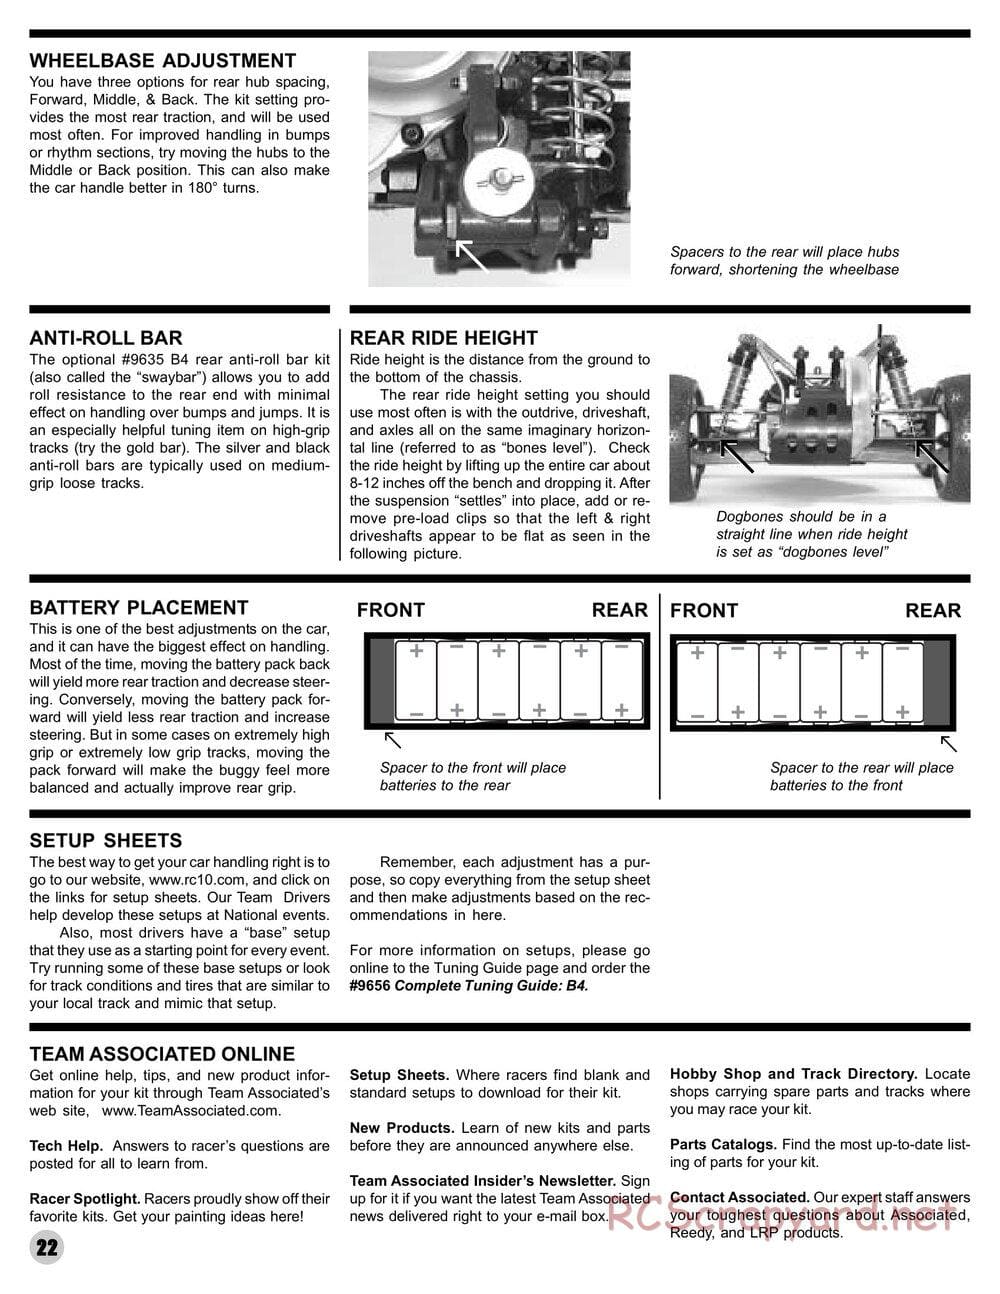 Team Associated - RC10 B4 RTR - Manual - Page 20